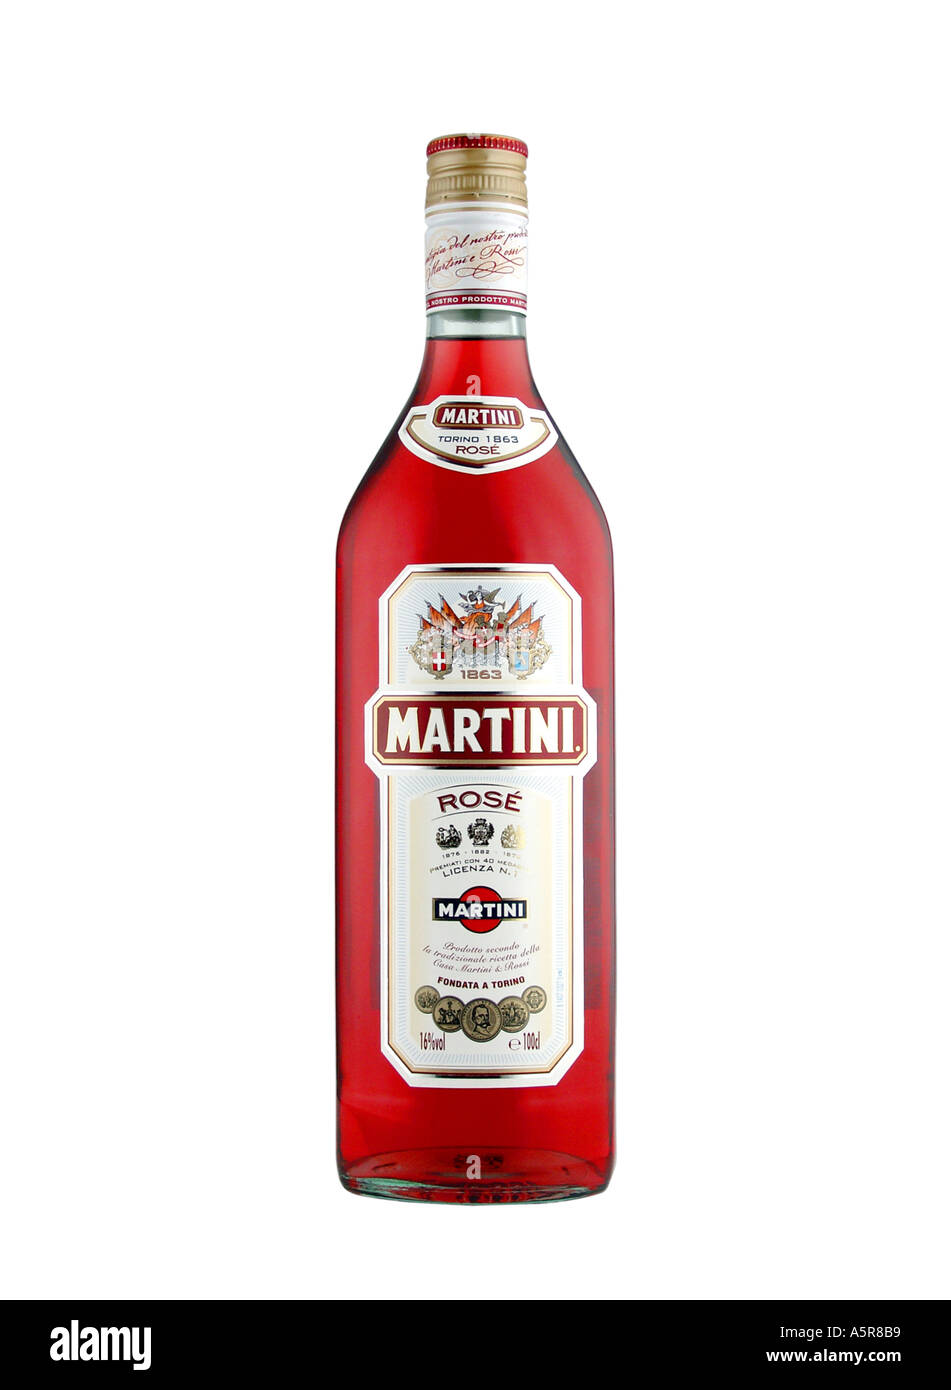 Sortie in beroep gaan Buskruit Martini Rose bottle on white background Stock Photo - Alamy